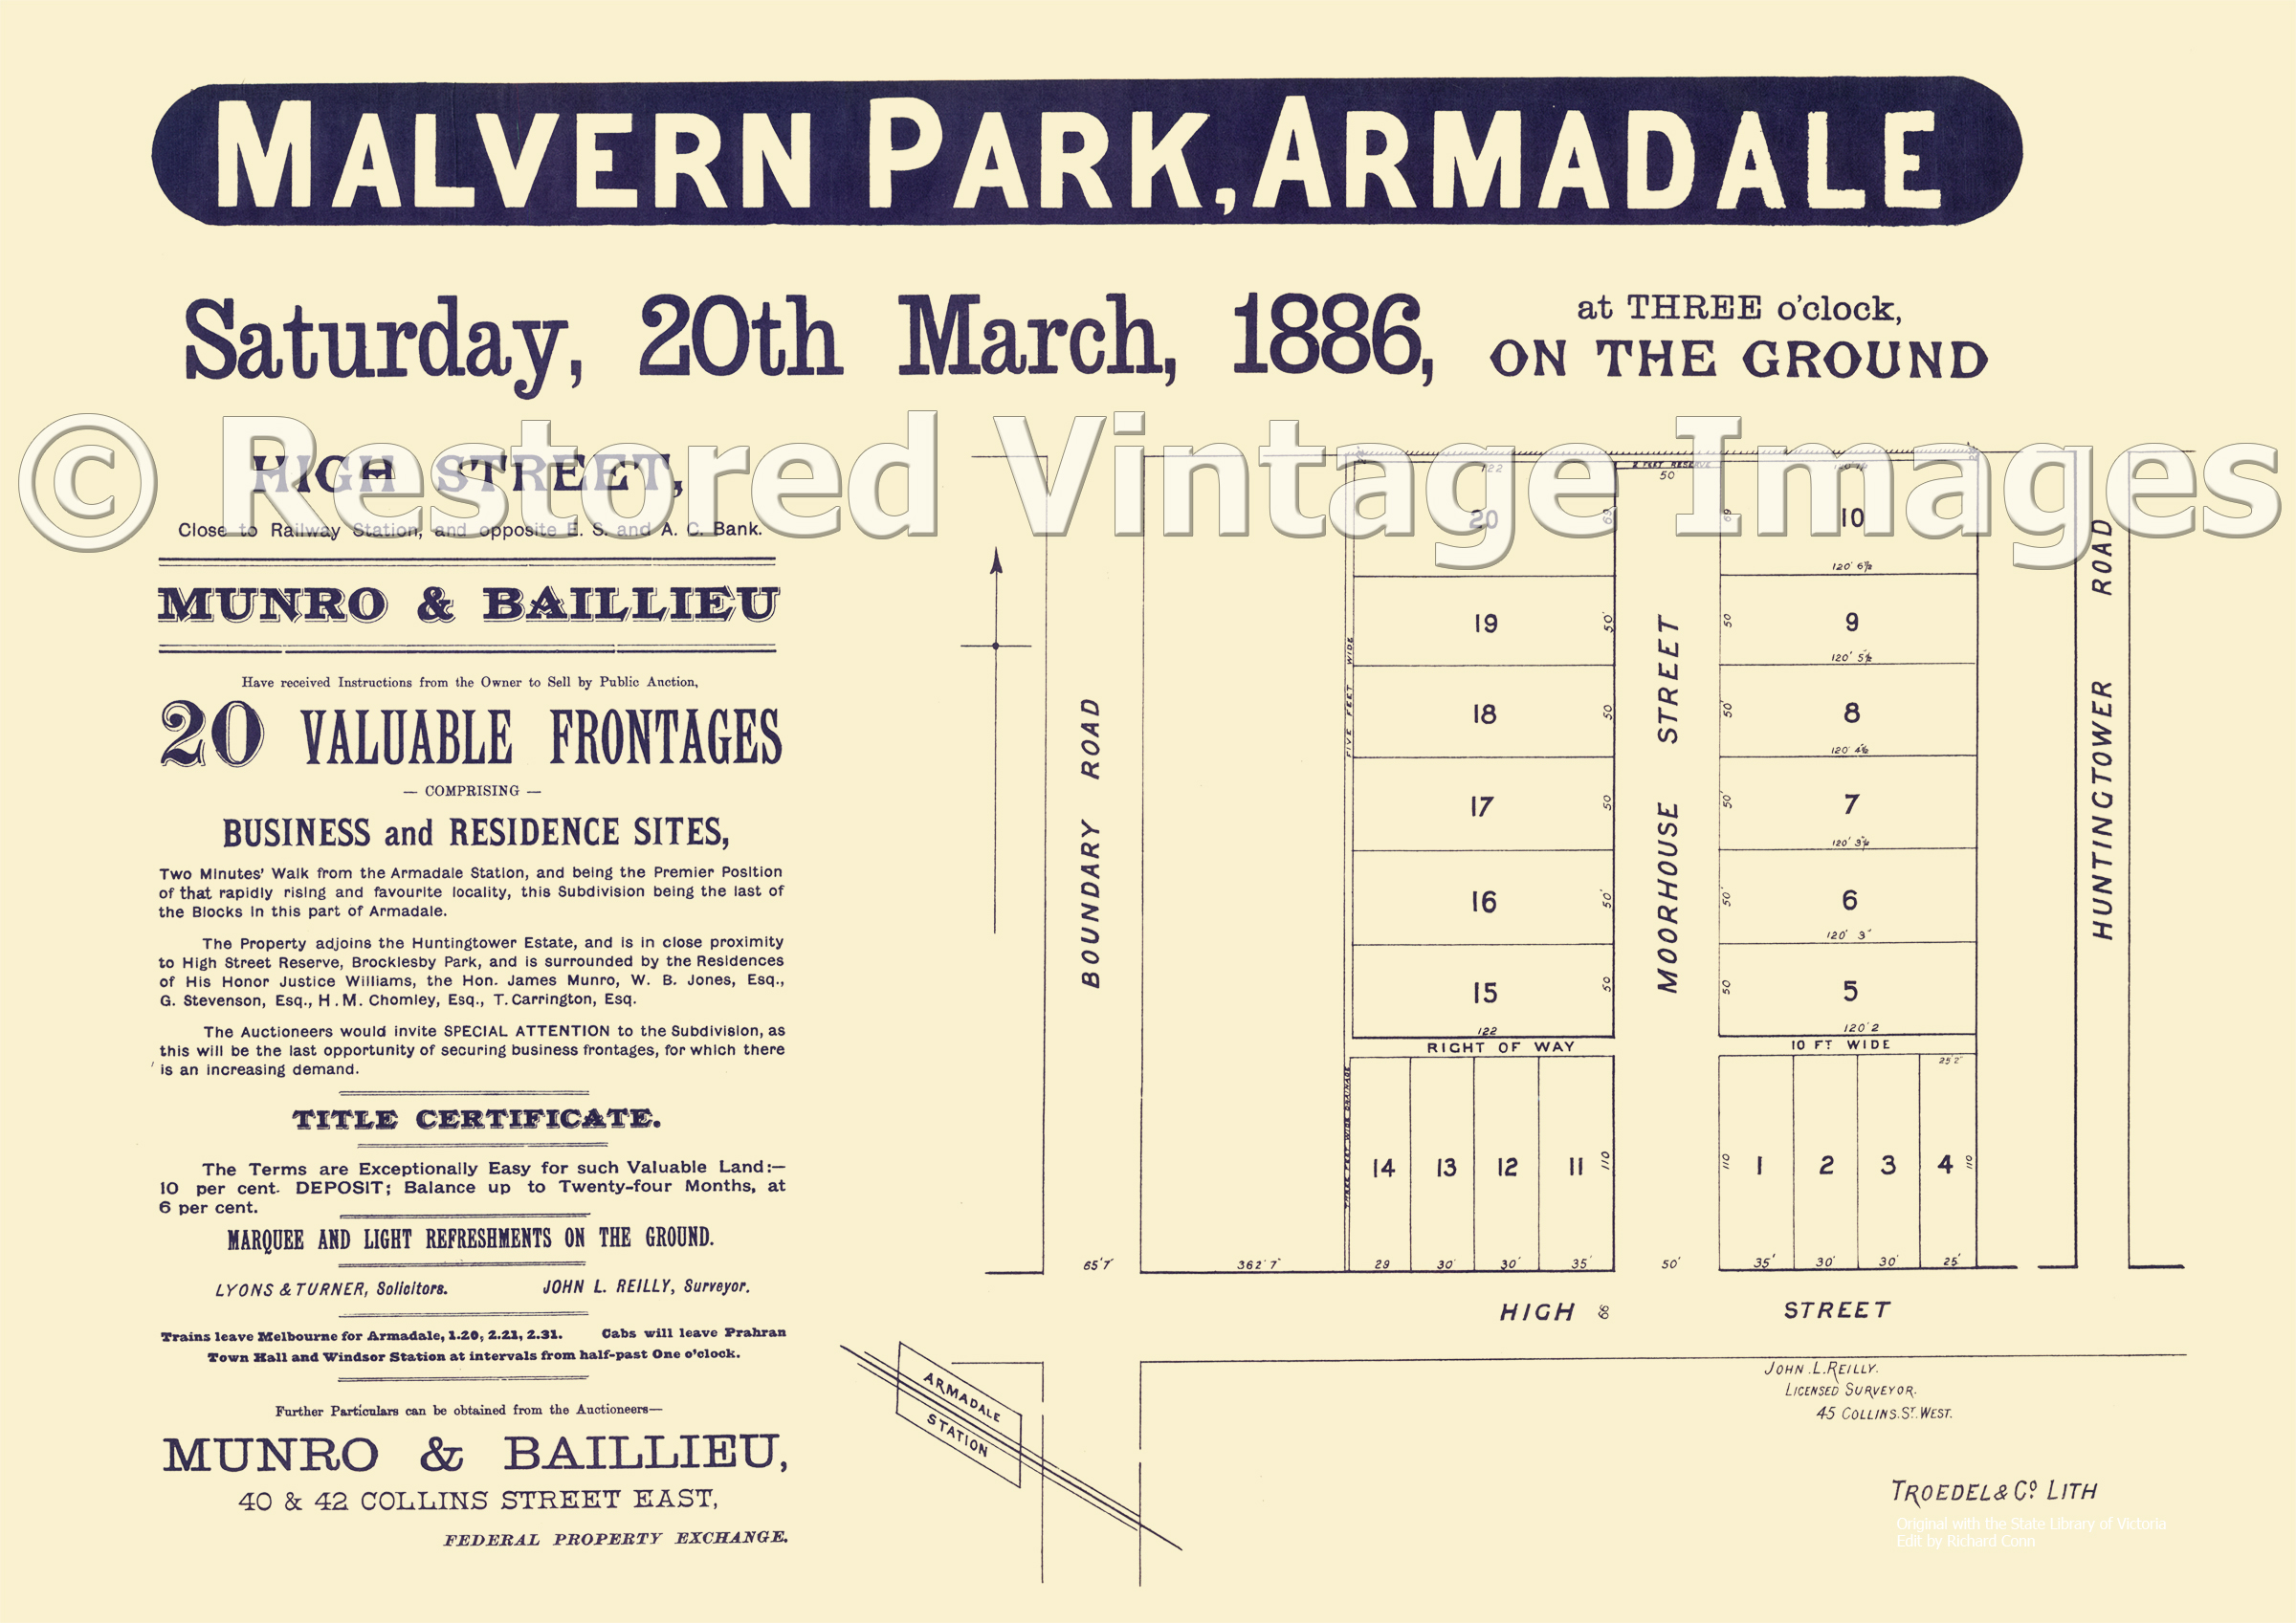 Malvern Park 20th March 1886 – Armadale